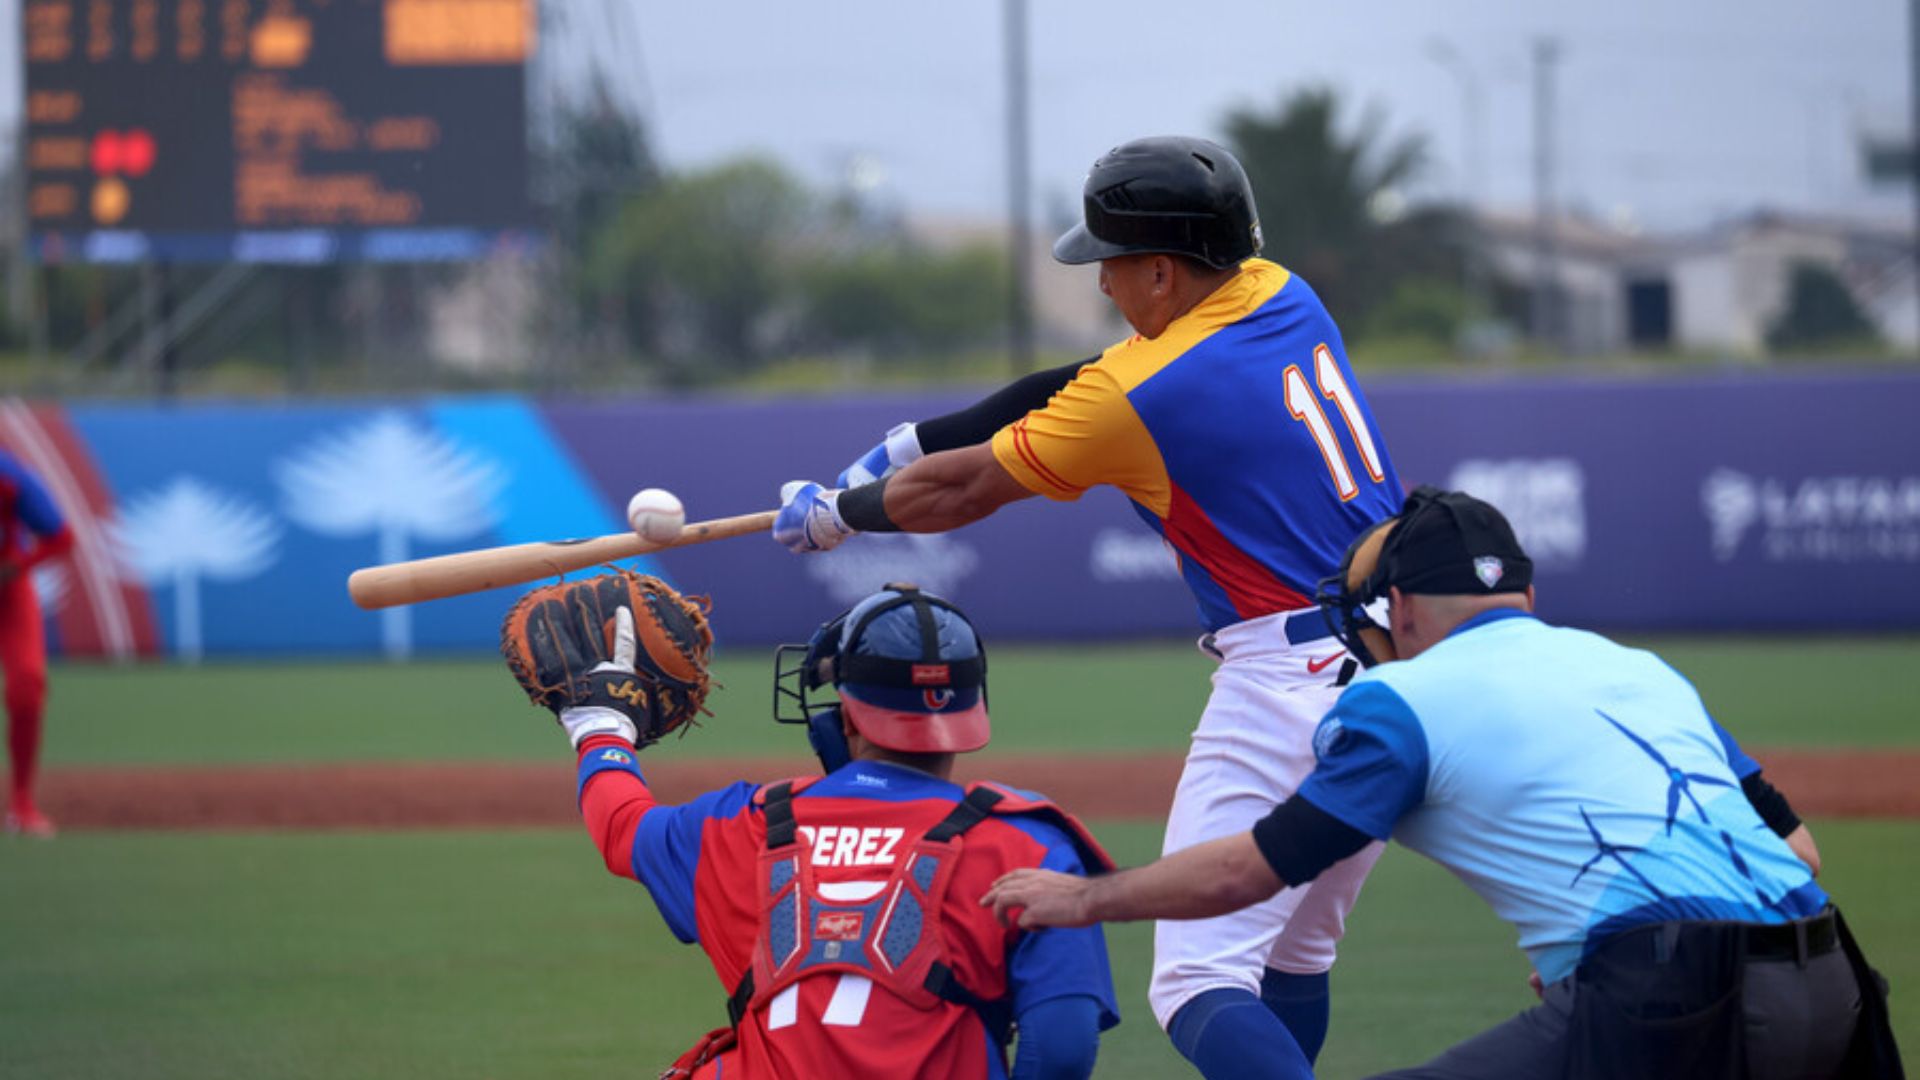 Baseball: Venezuela recovers hope, narrowly defeats Cuba 6-5